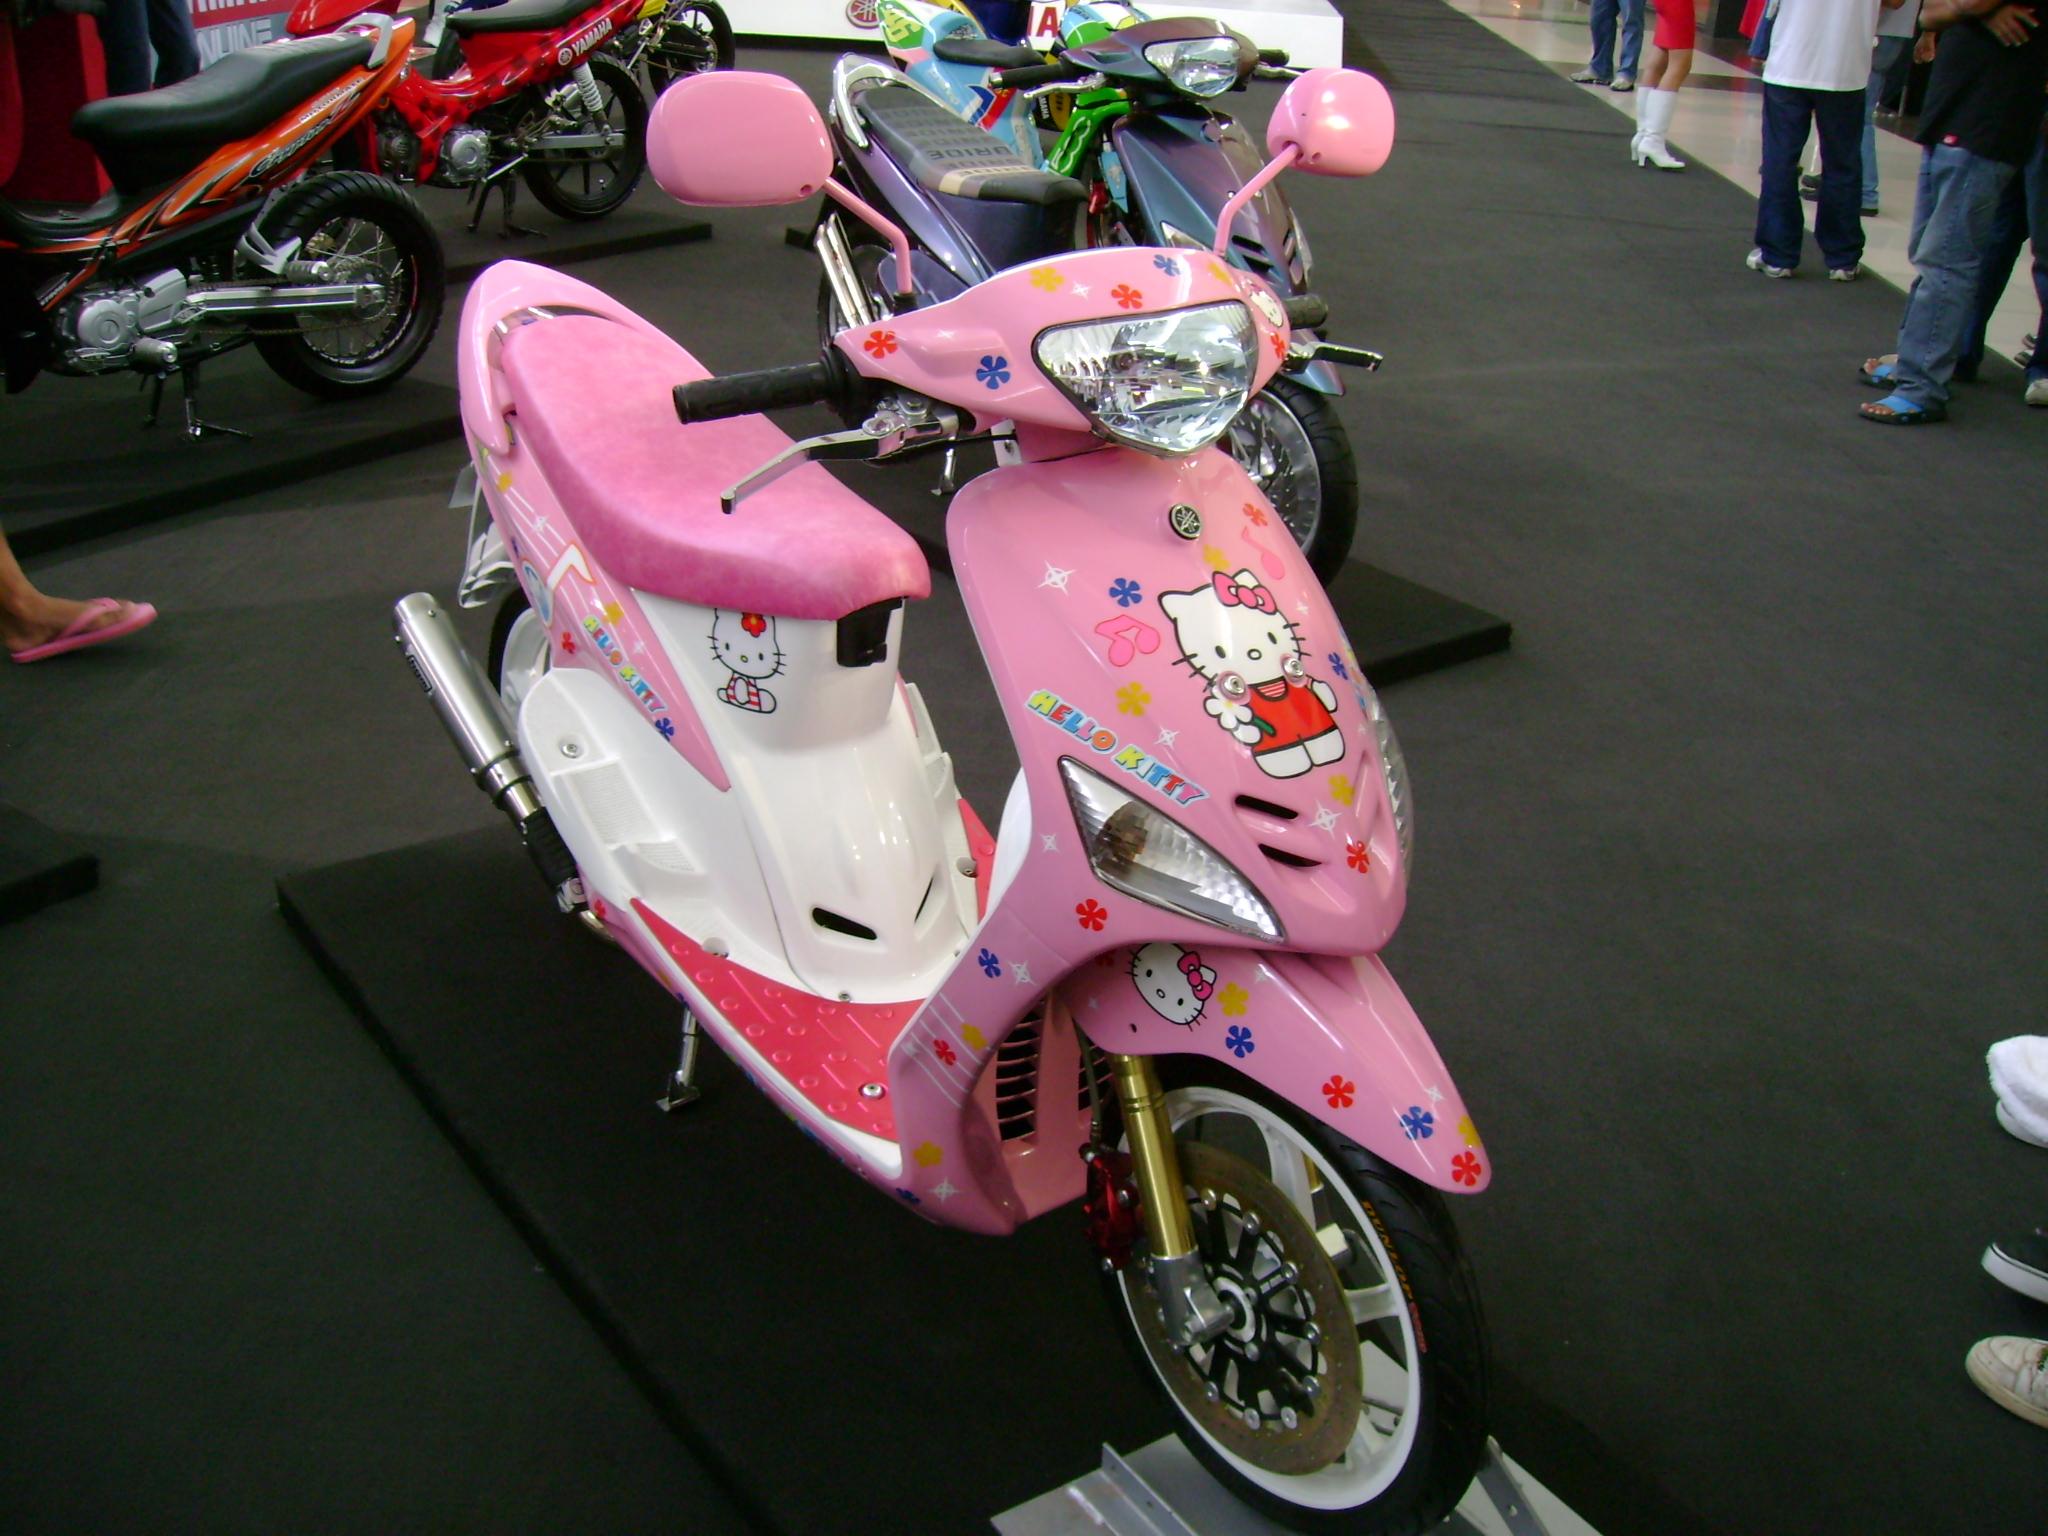 Modifikasi Mio Soul Warna Pink. 70 Gambar Modifikasi Motor Mio Warna Pink Terbaik